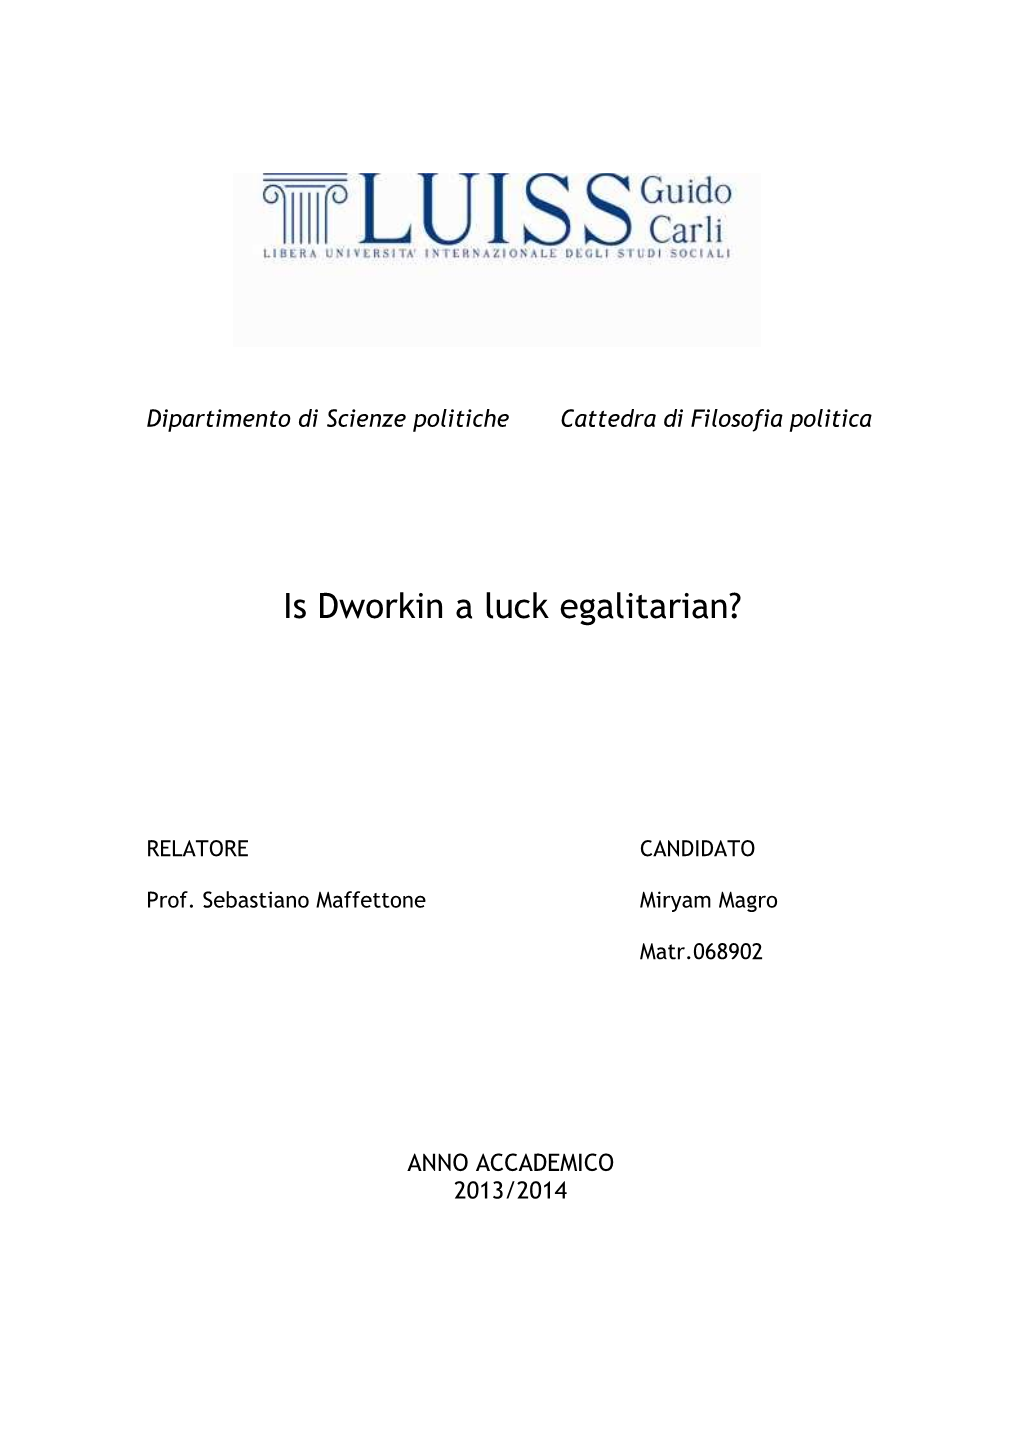 Is Dworkin a Luck Egalitarian?